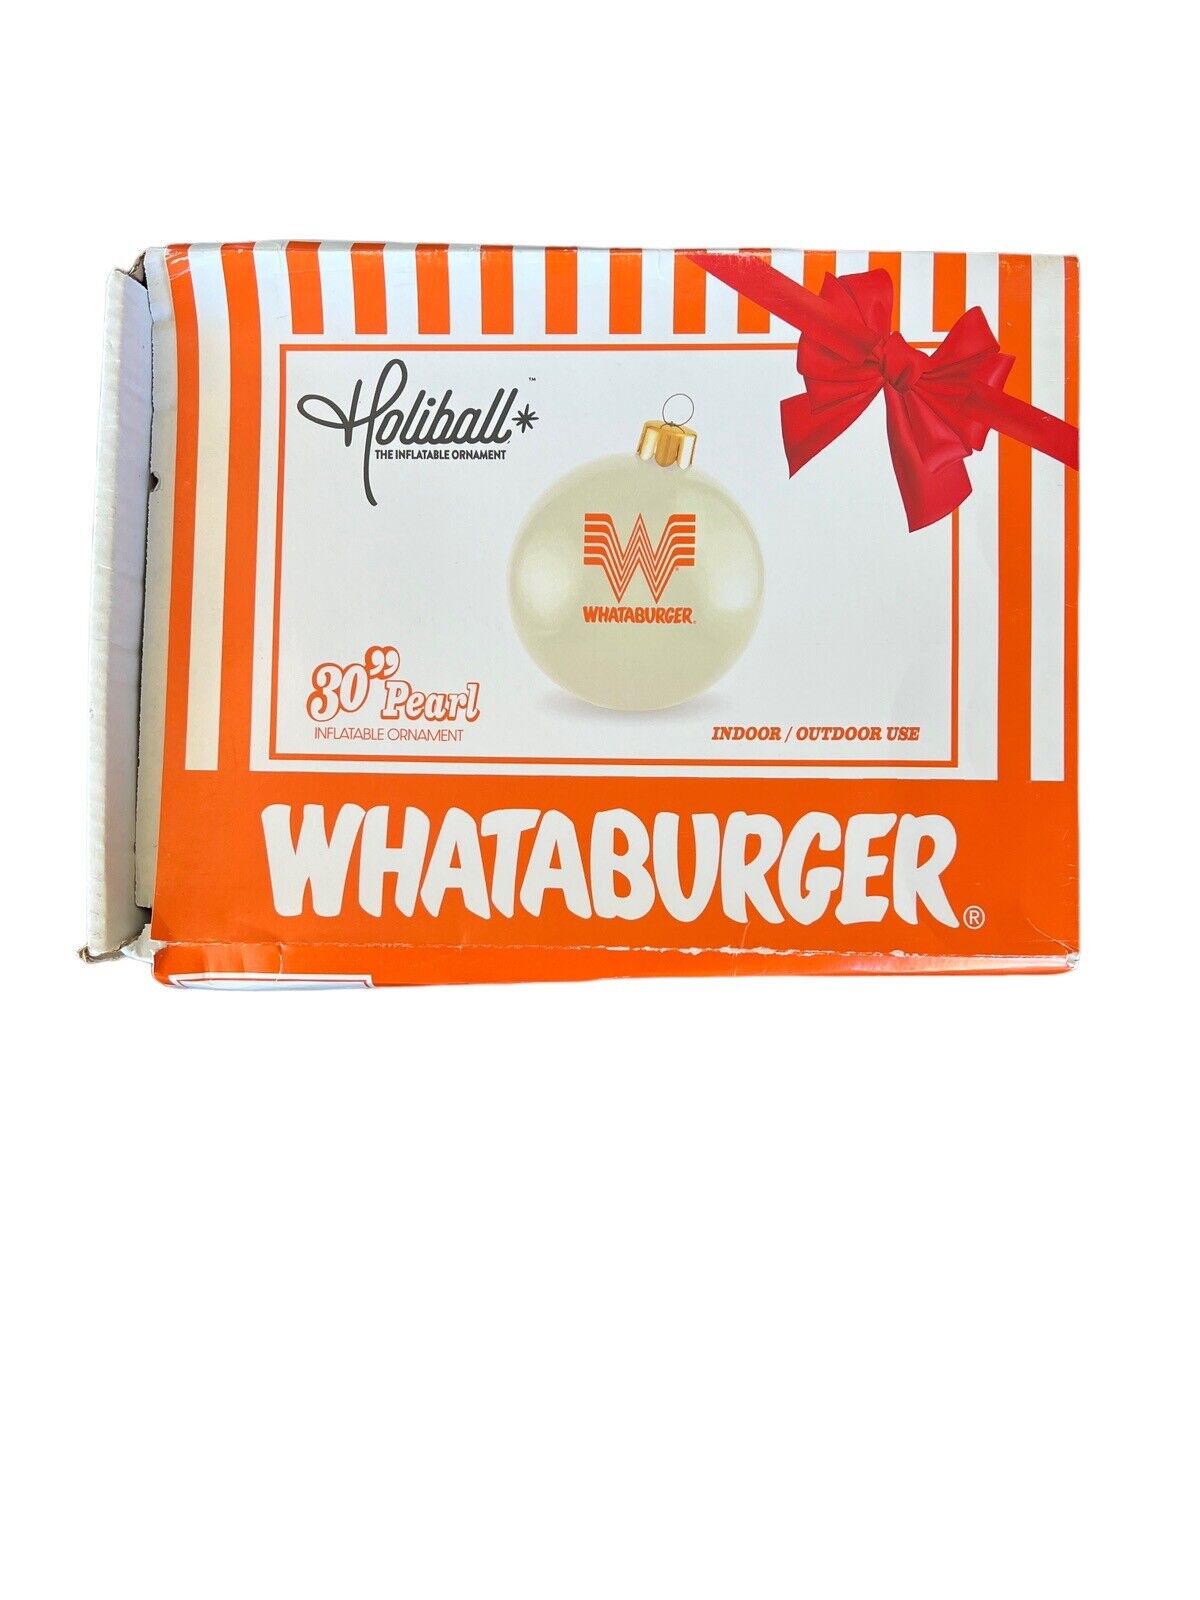 RARE Whataburger Holiball 30” Pearl Inflatable Holiday Ornament Collectible